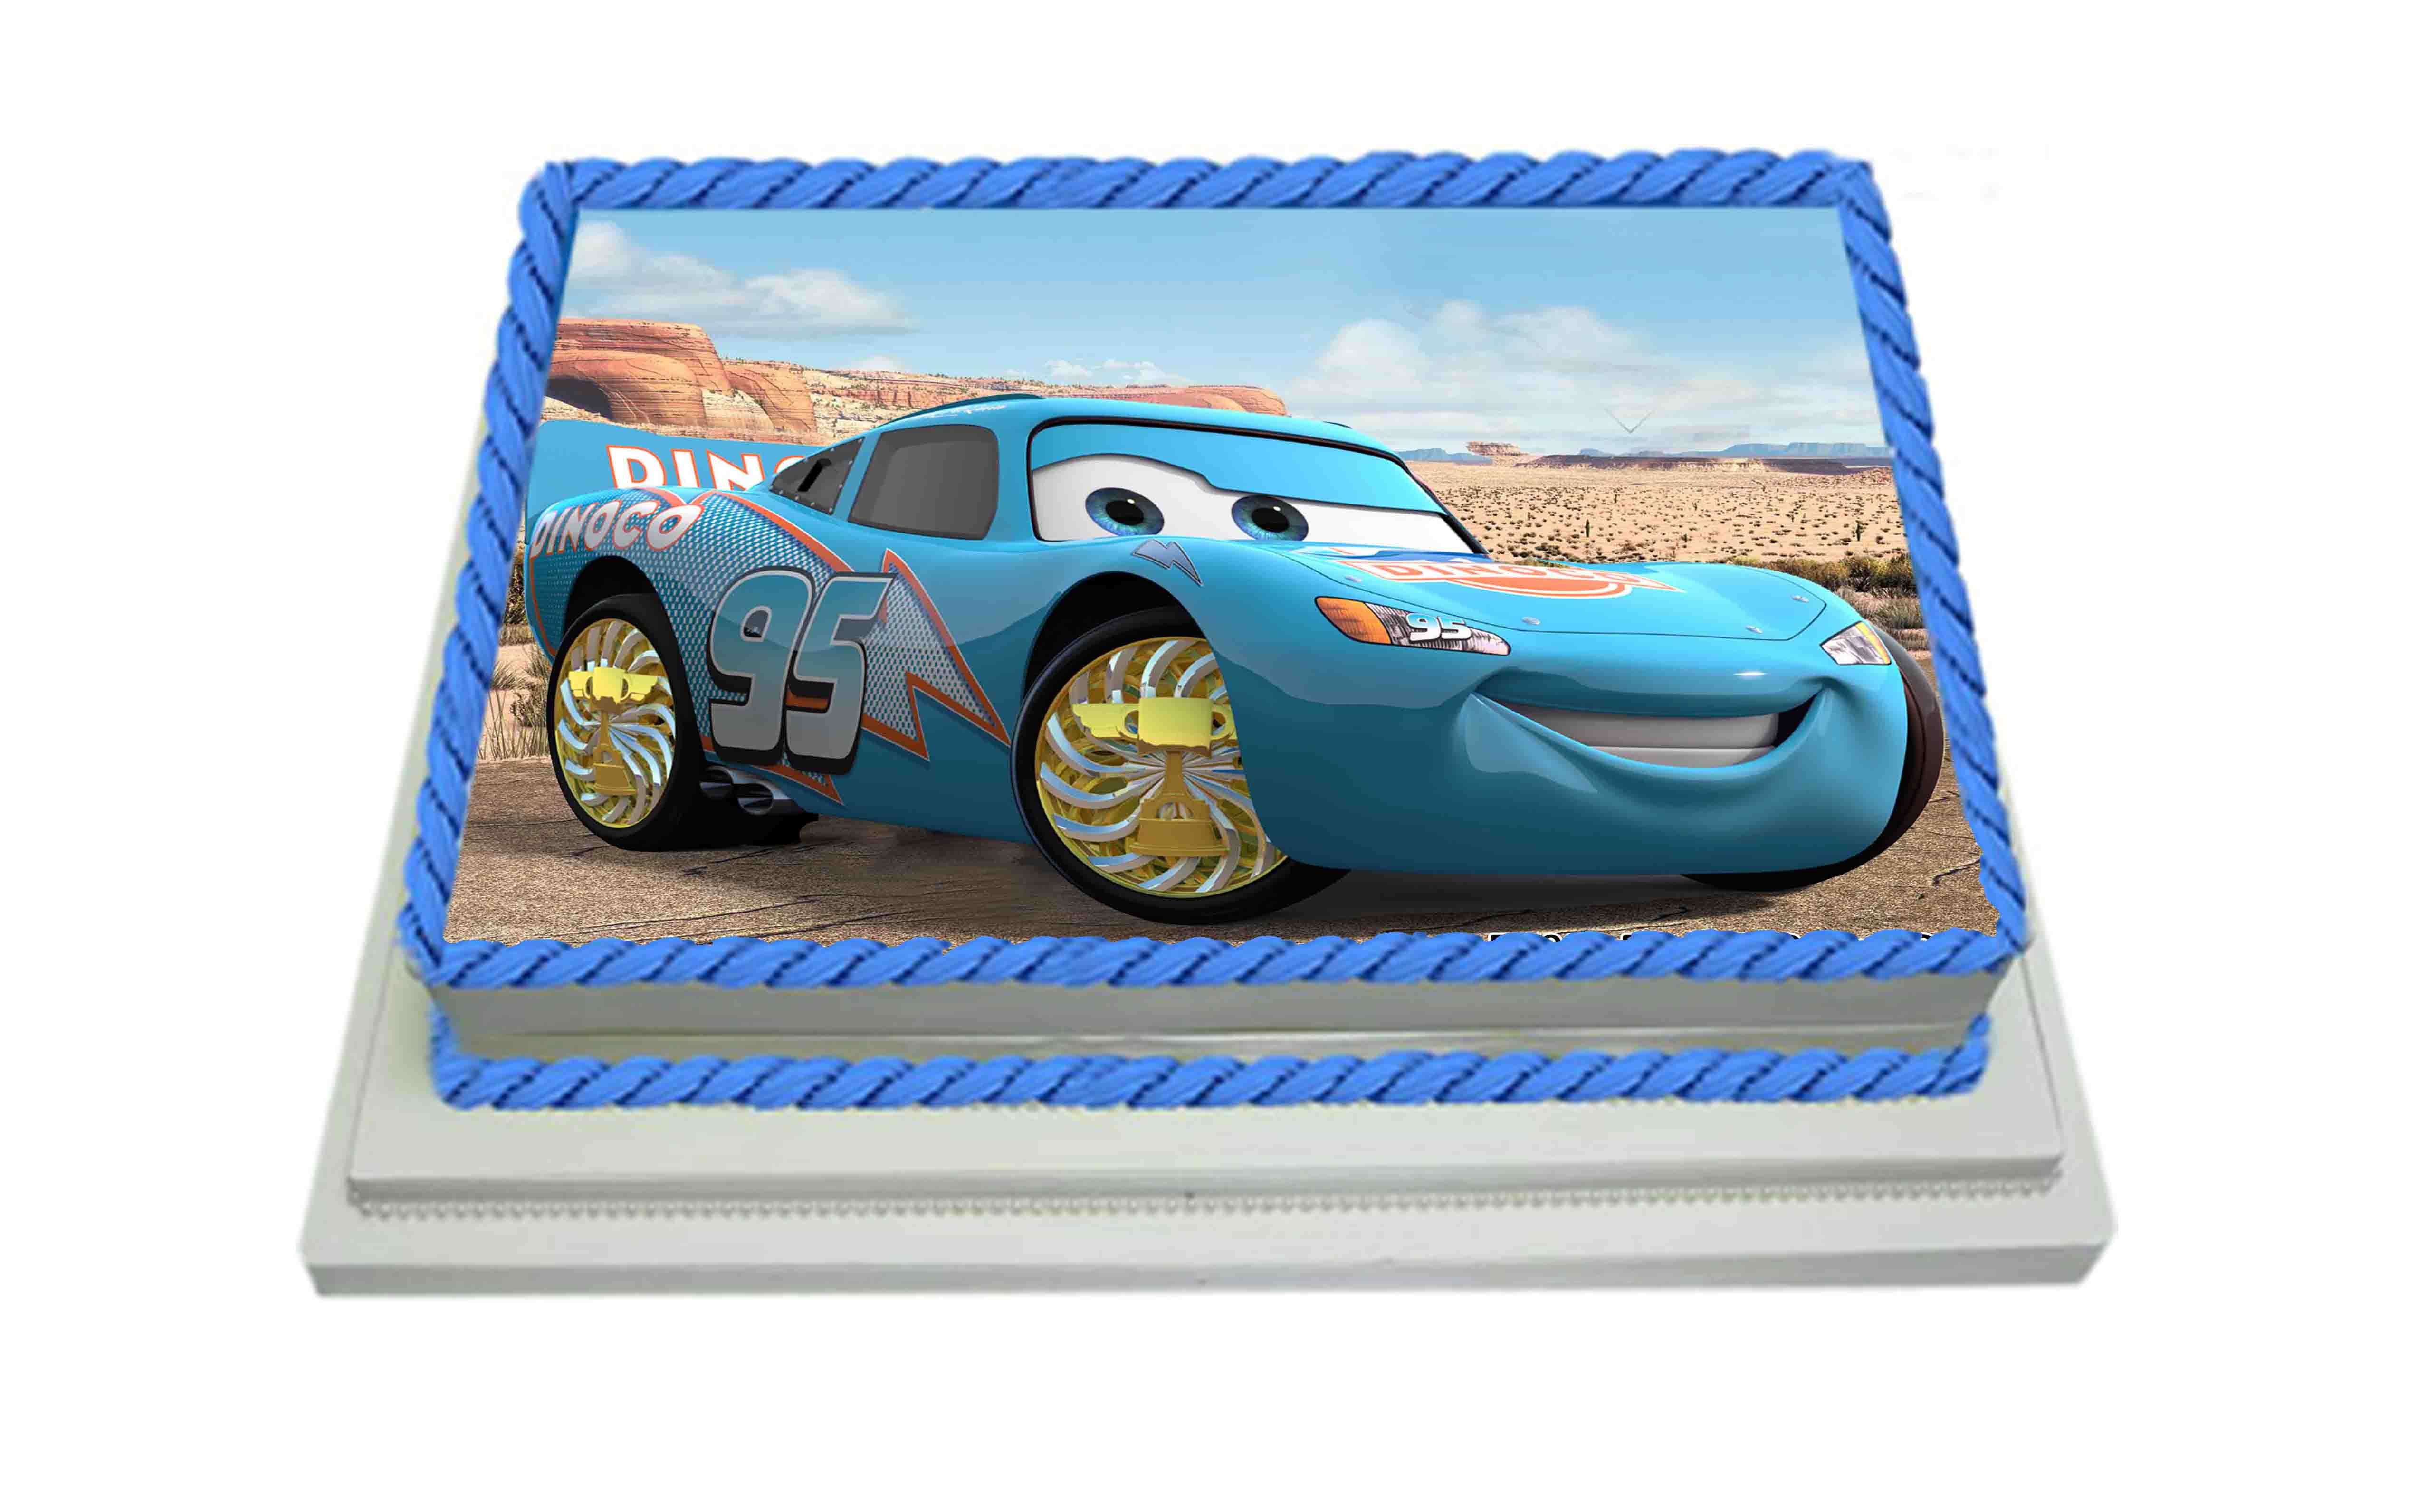 Cars Built For Speed - Cake Decorating Set - Walmart.com